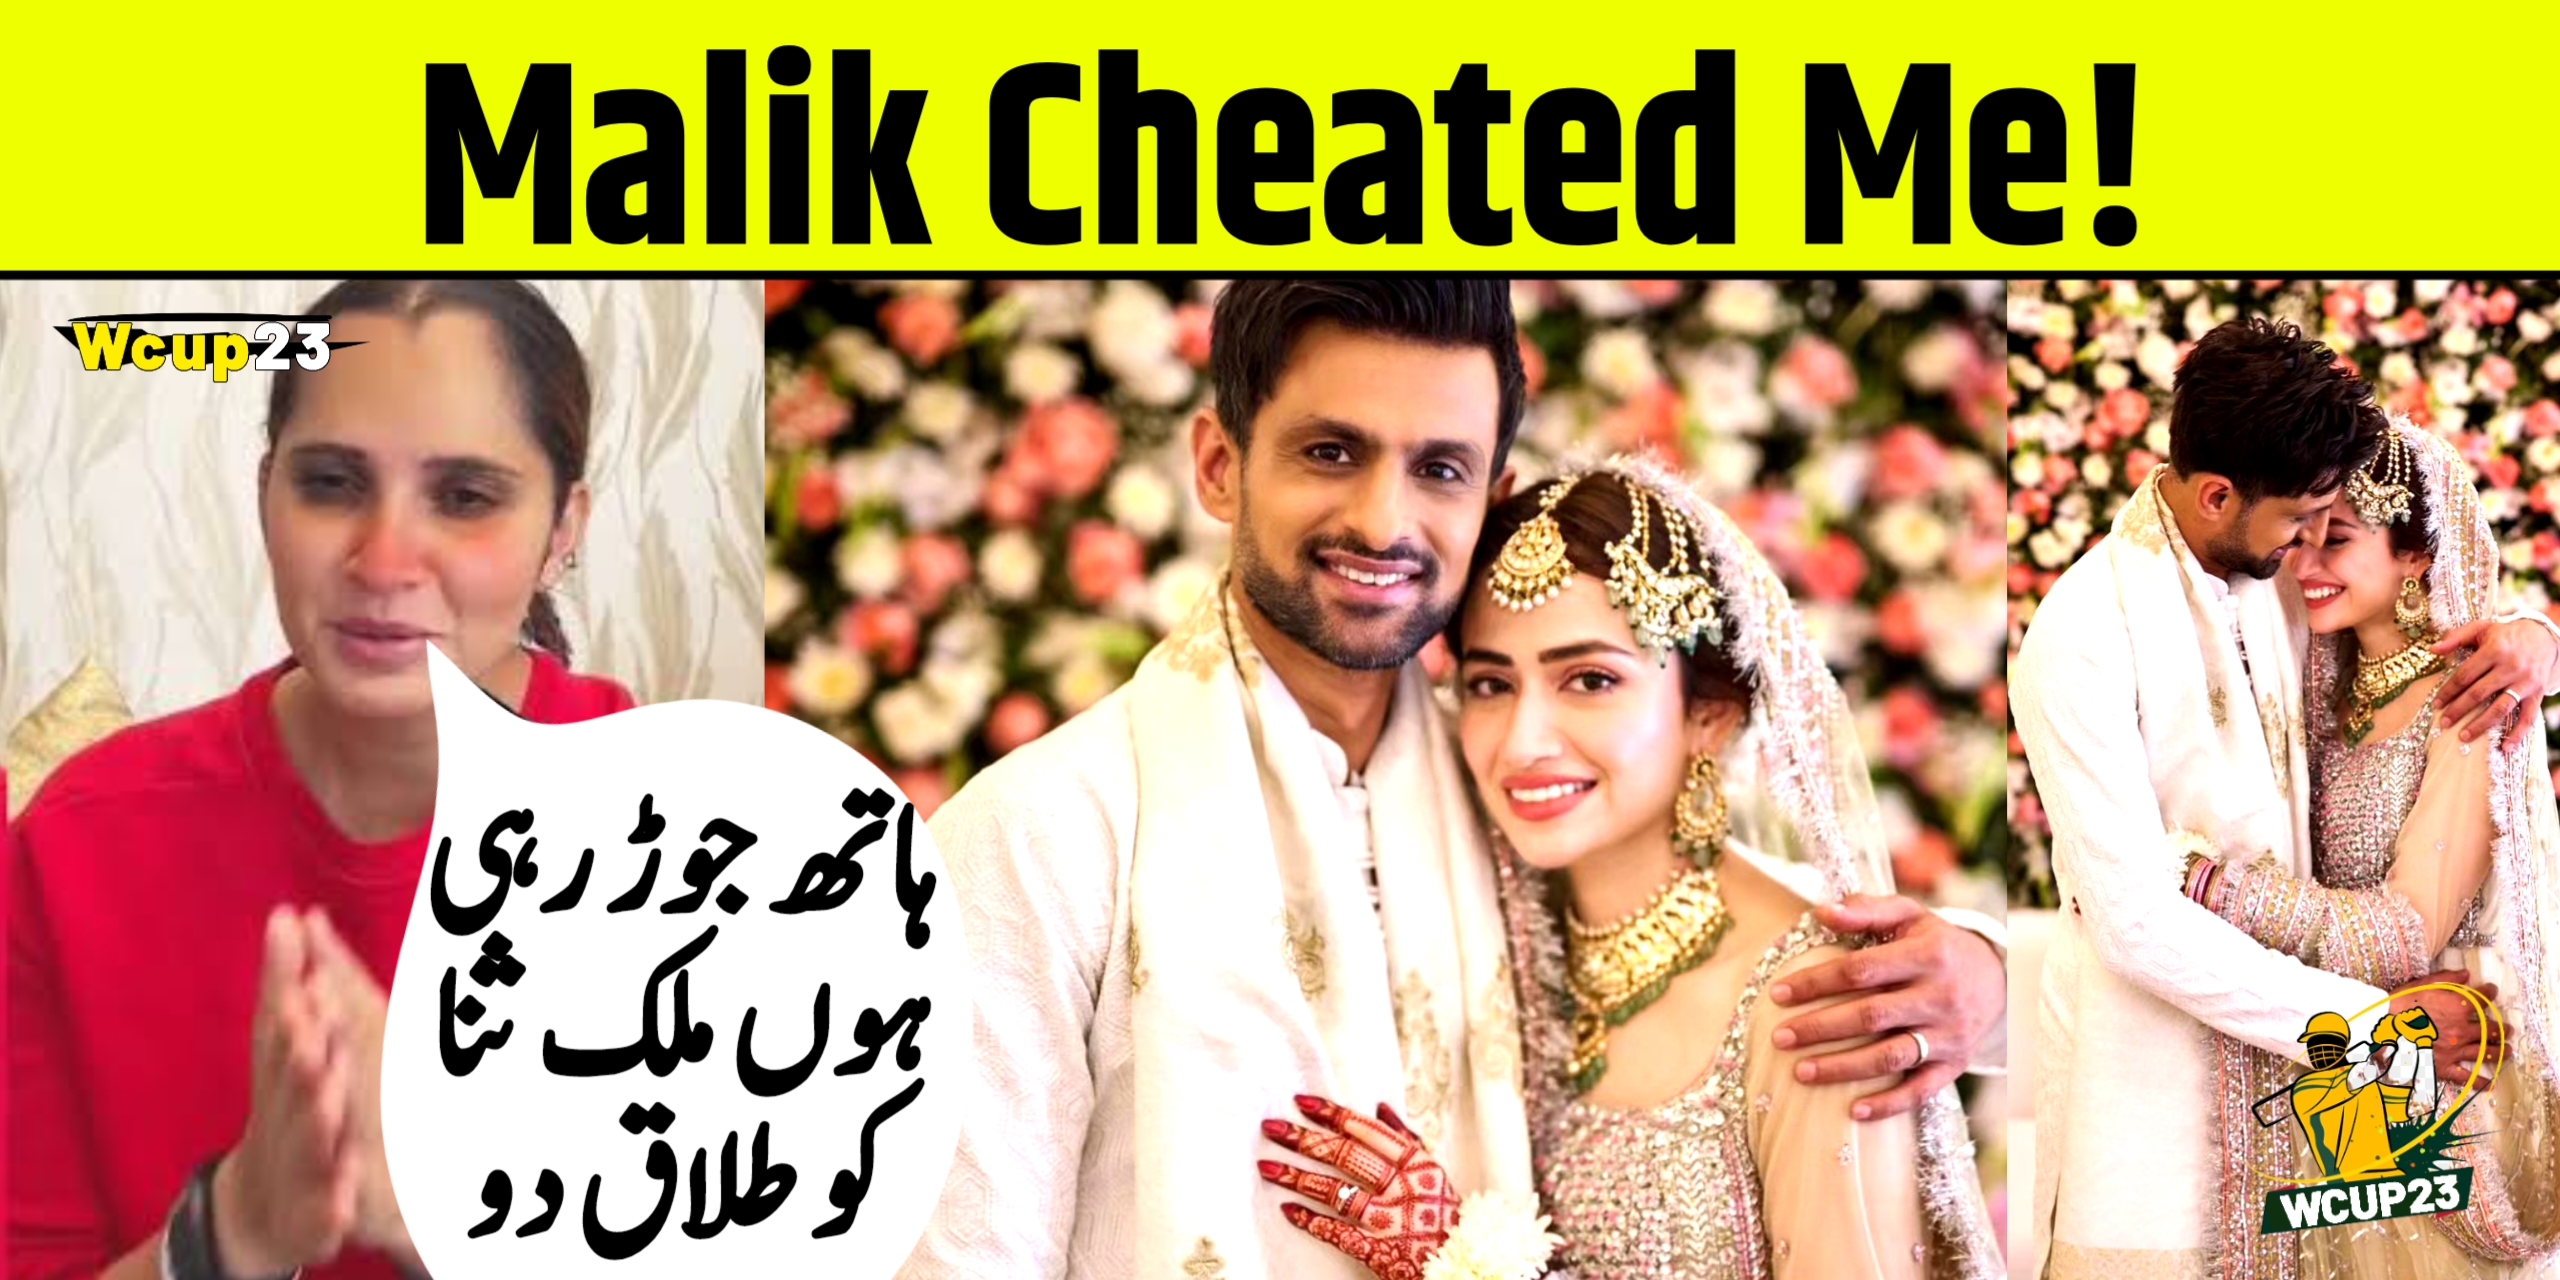 Are Shoaib Malik and Sana Javed married? Why did Shoaib Malik cheat on Sania Mirza?